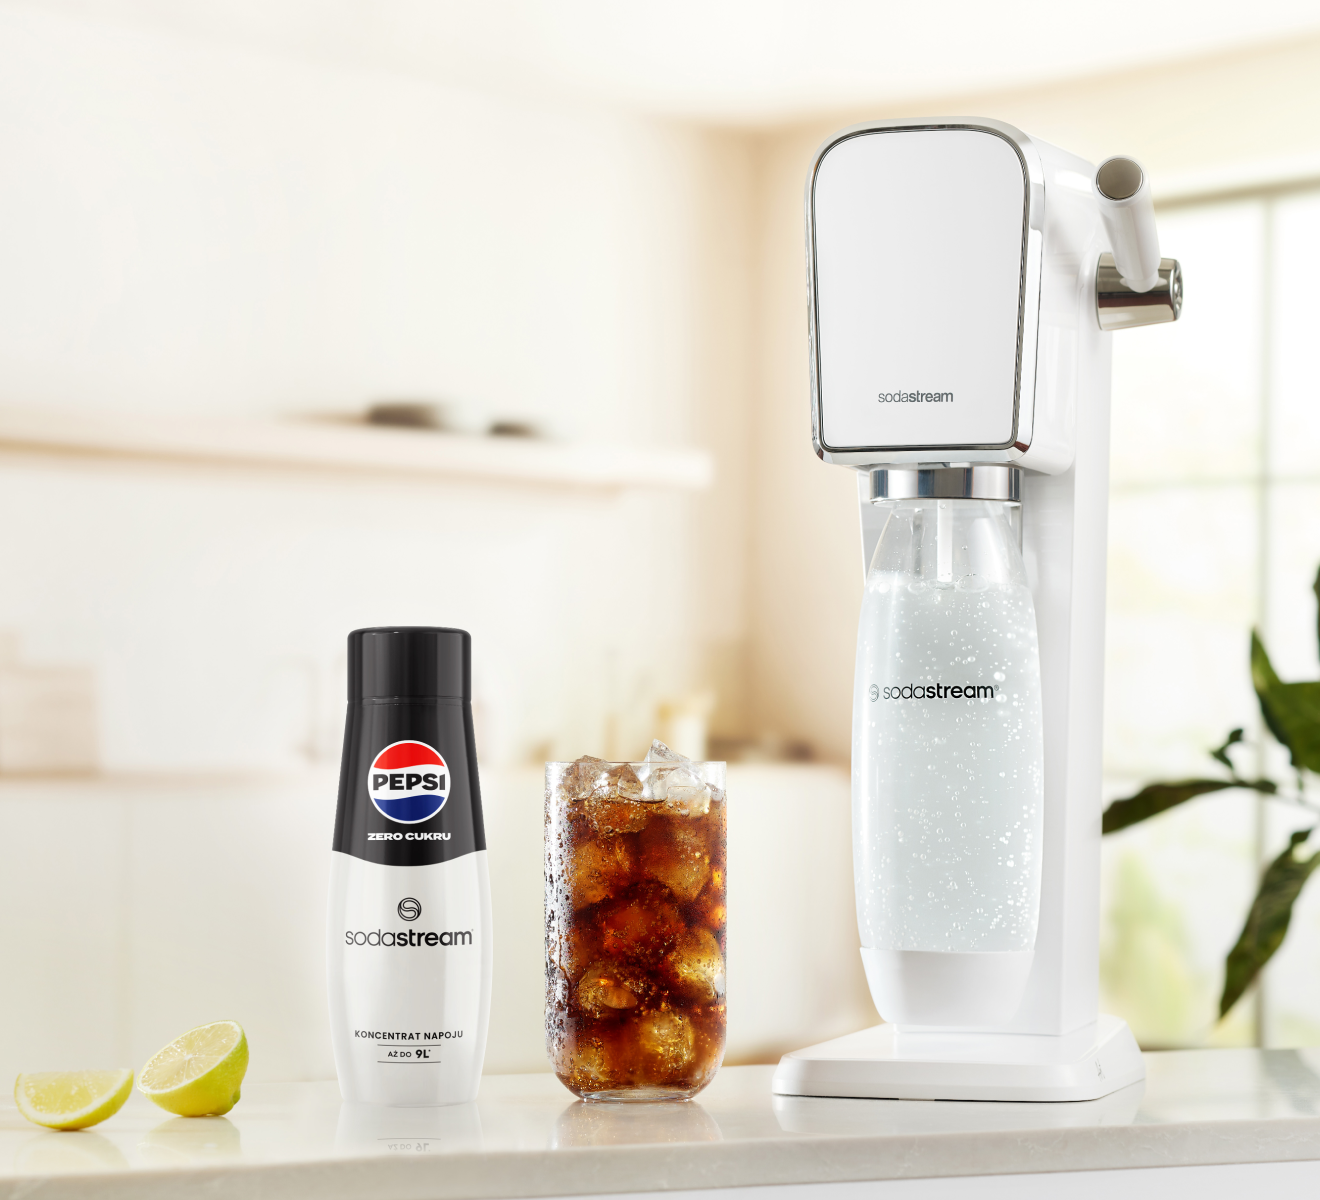 Saturator SodaStream, syrop bez cukru Pepsi Zero i Pepsi Zero przygotowana w saturatorze SodaStream w szklance